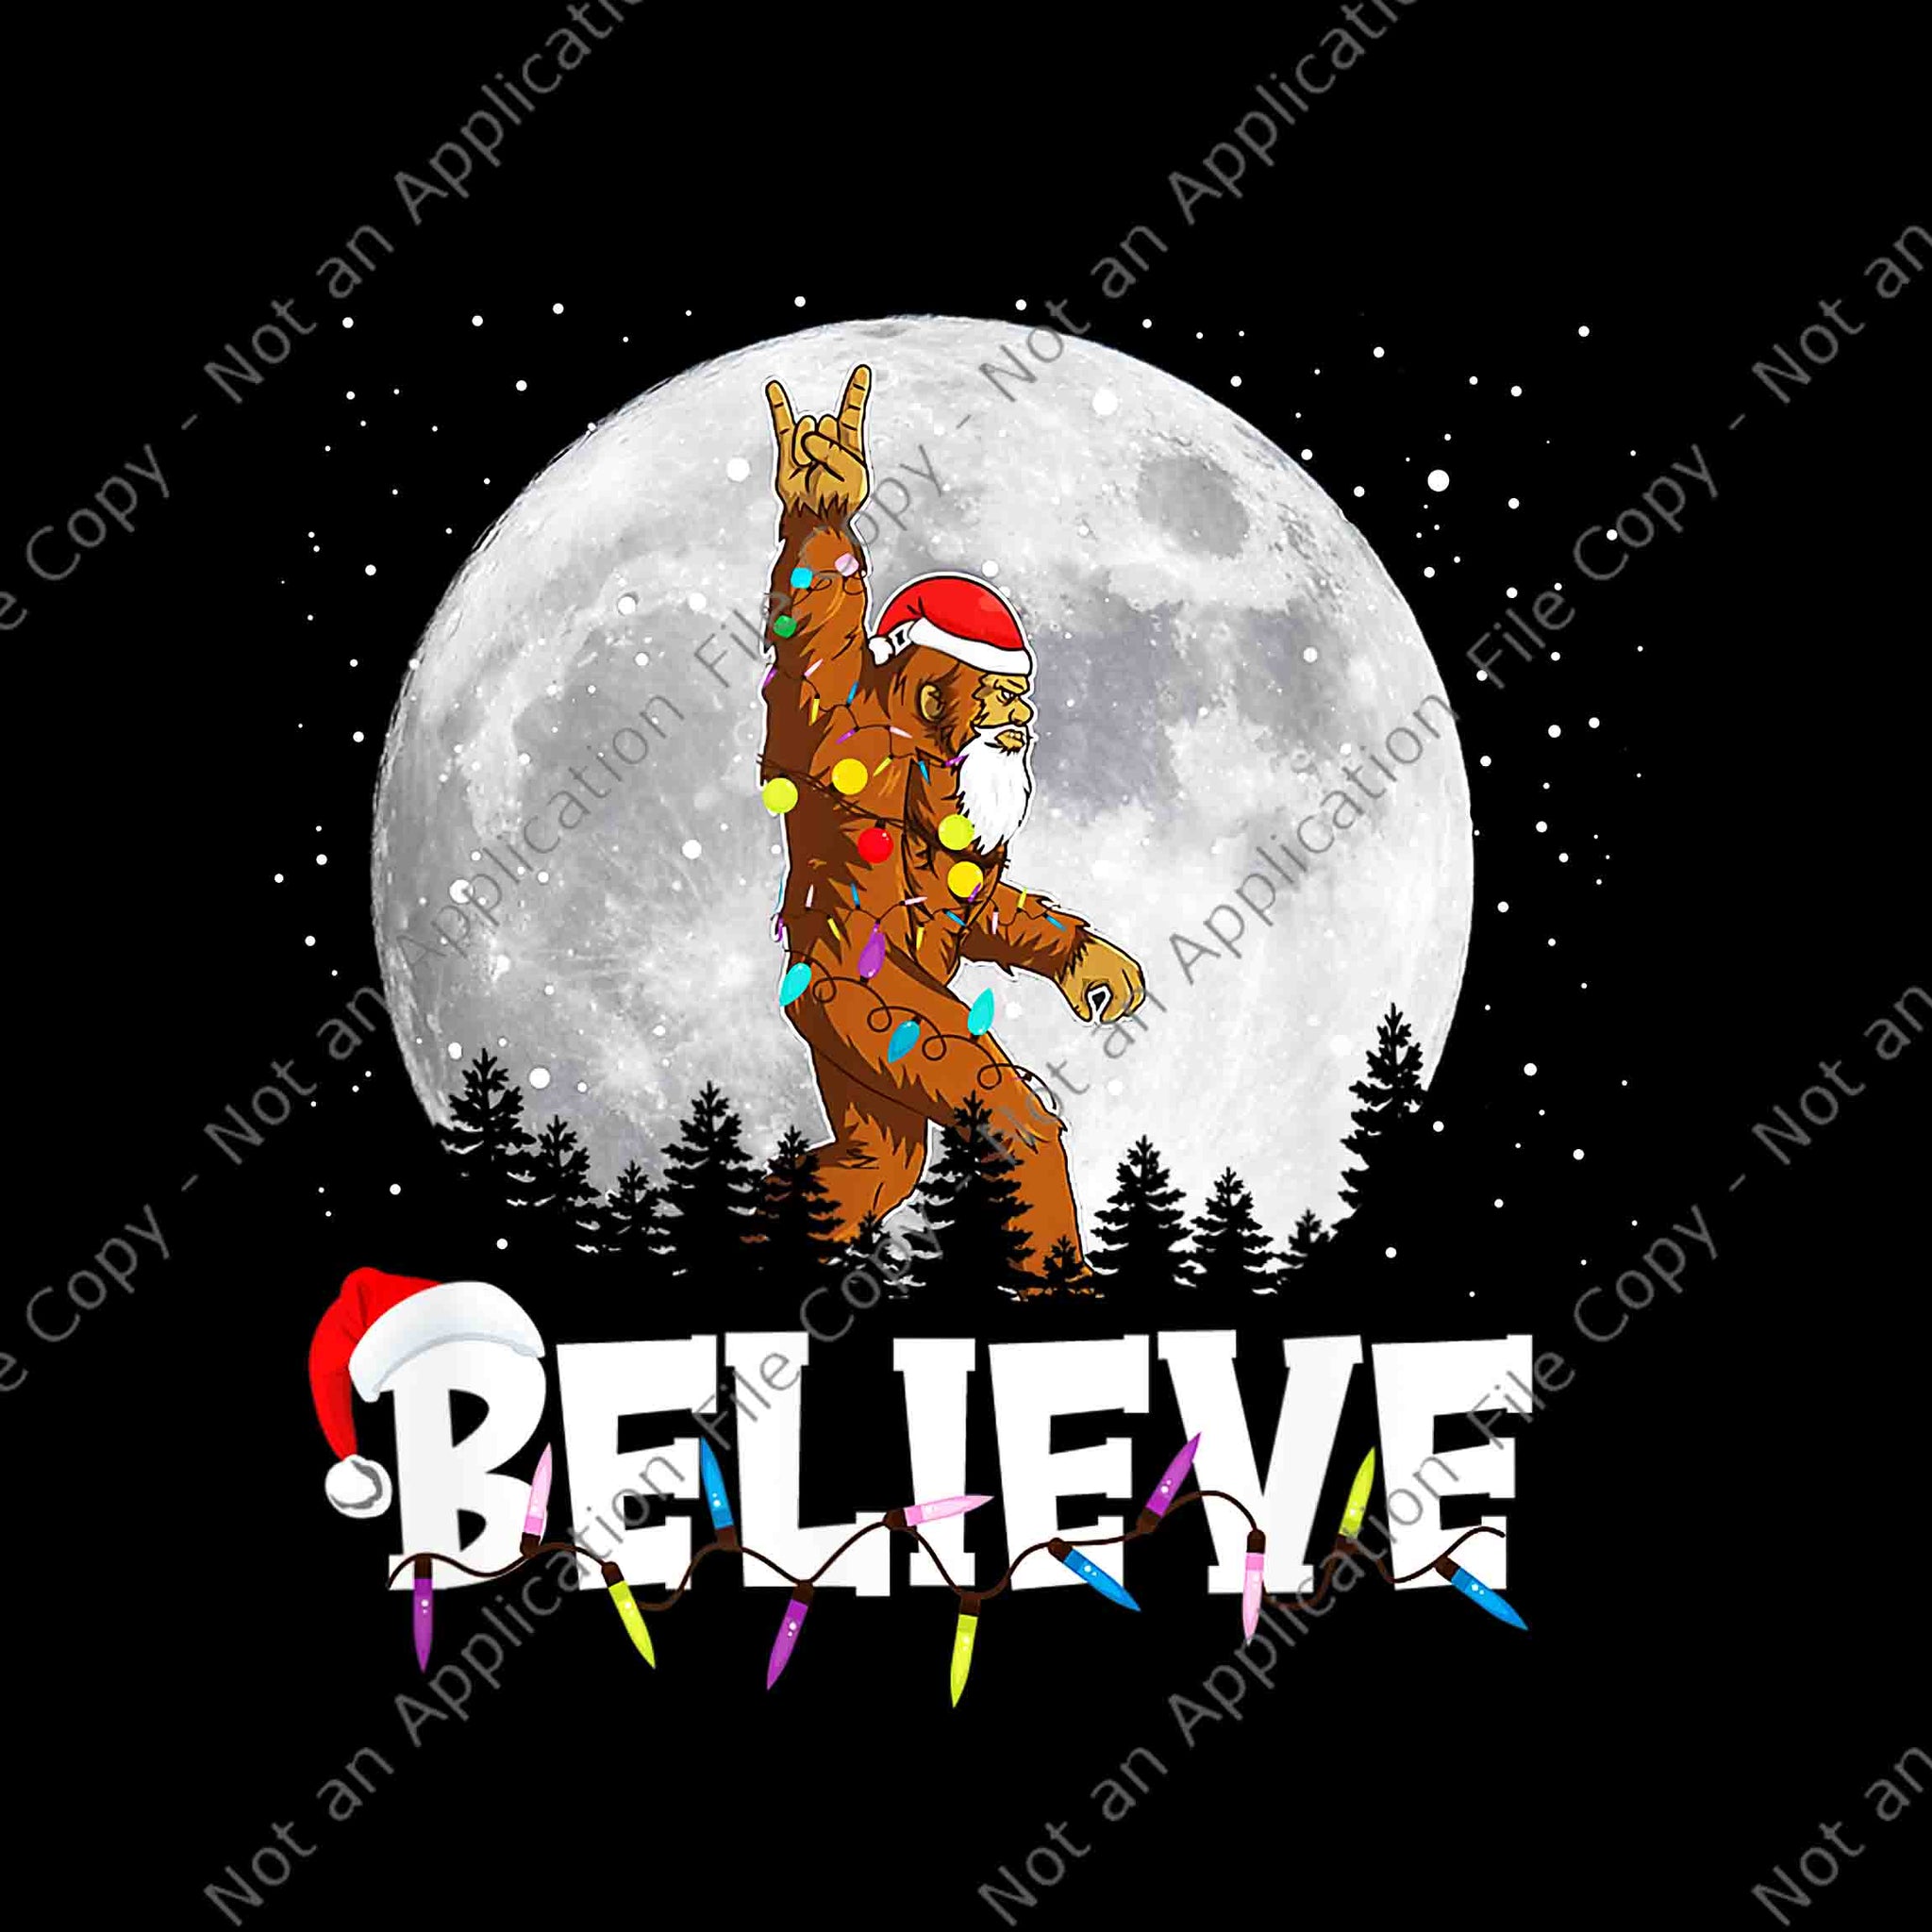 Santa Bigfoot Christmas Light Funny Sasquatch Believe Xmas Png, Believe Bigfoot Christmas Png, Santa cXmas Png, Bigfoot Christmas Png